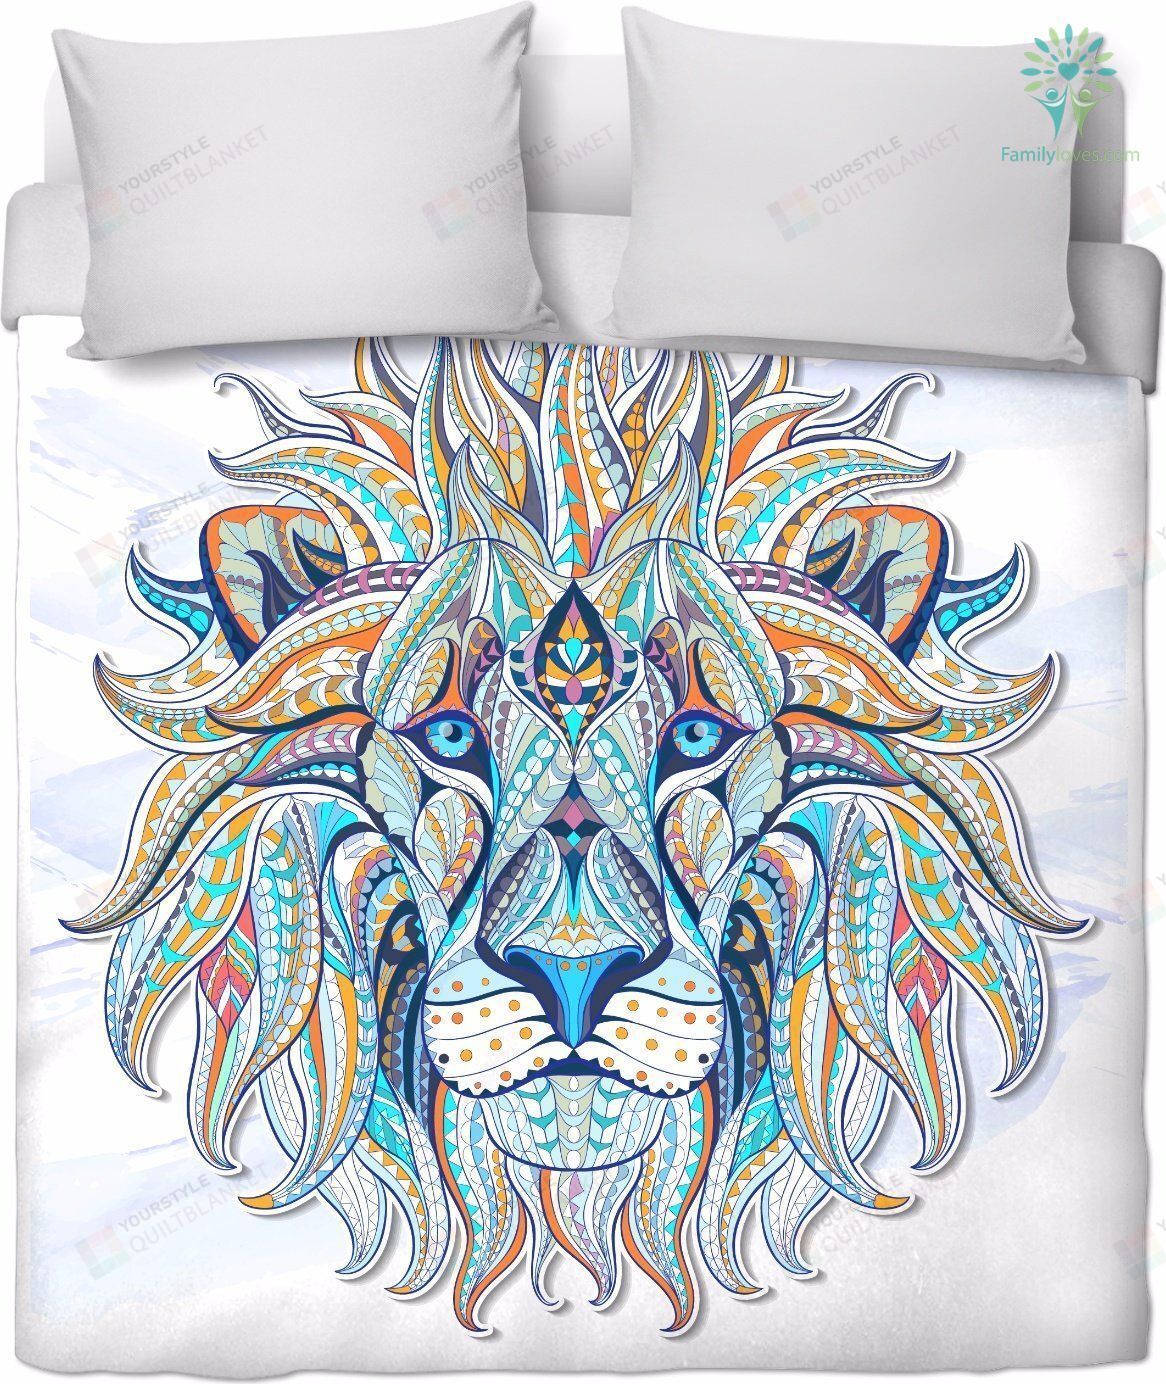 Lion Cotton Bed Sheets Spread Comforter Duvet Cover Bedding Sets